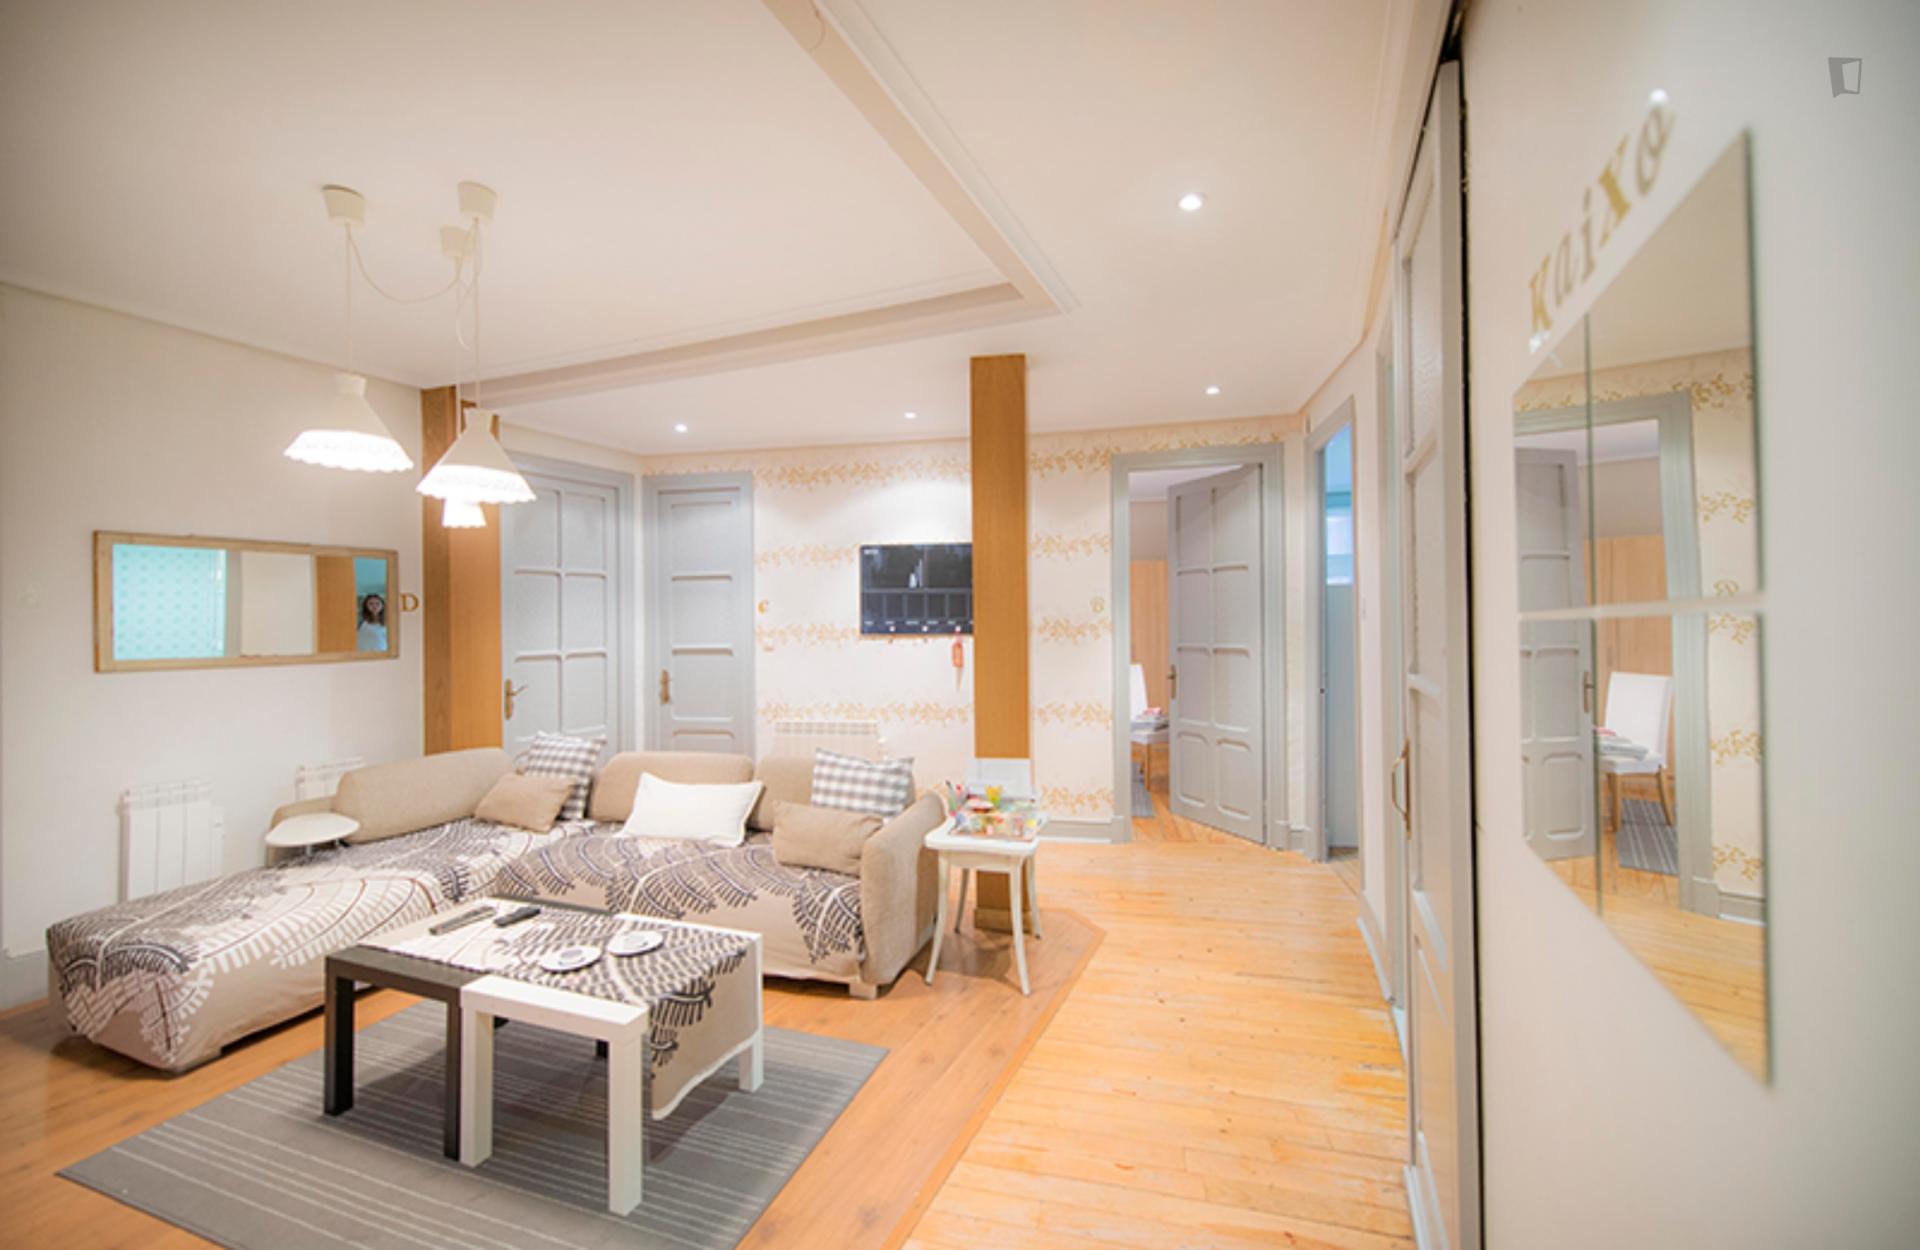 Kalea 15- Beautiful Double bedroom apartment in Bilbao